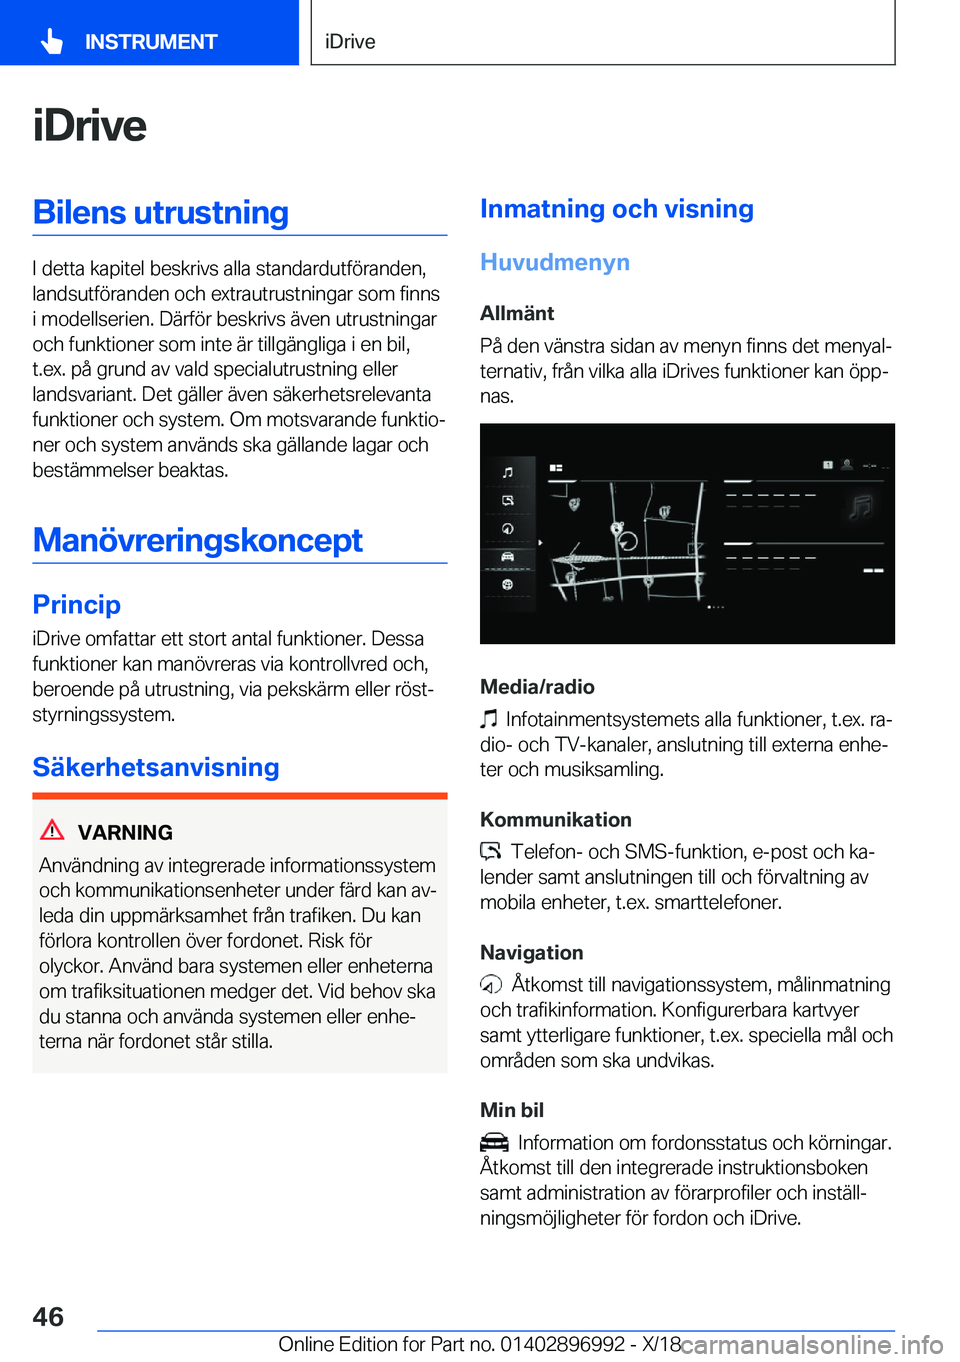 BMW Z4 2019  InstruktionsbÖcker (in Swedish) �i�D�r�i�v�e�B�i�l�e�n�s��u�t�r�u�s�t�n�i�n�g
�I��d�e�t�t�a��k�a�p�i�t�e�l��b�e�s�k�r�i�v�s��a�l�l�a��s�t�a�n�d�a�r�d�u�t�f�